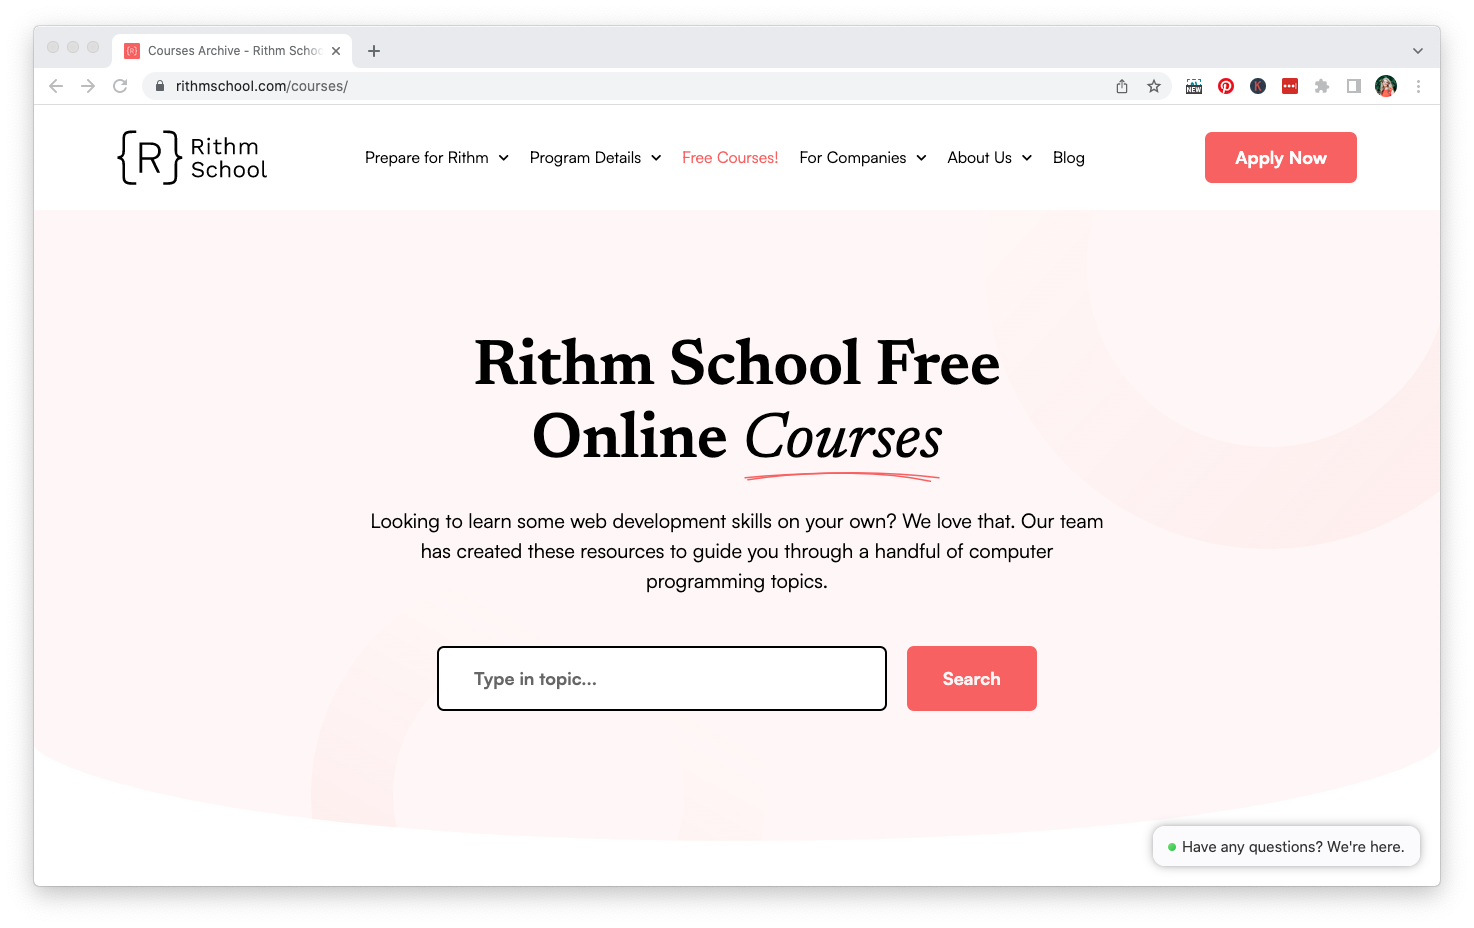 Rithm School Free Online Courses